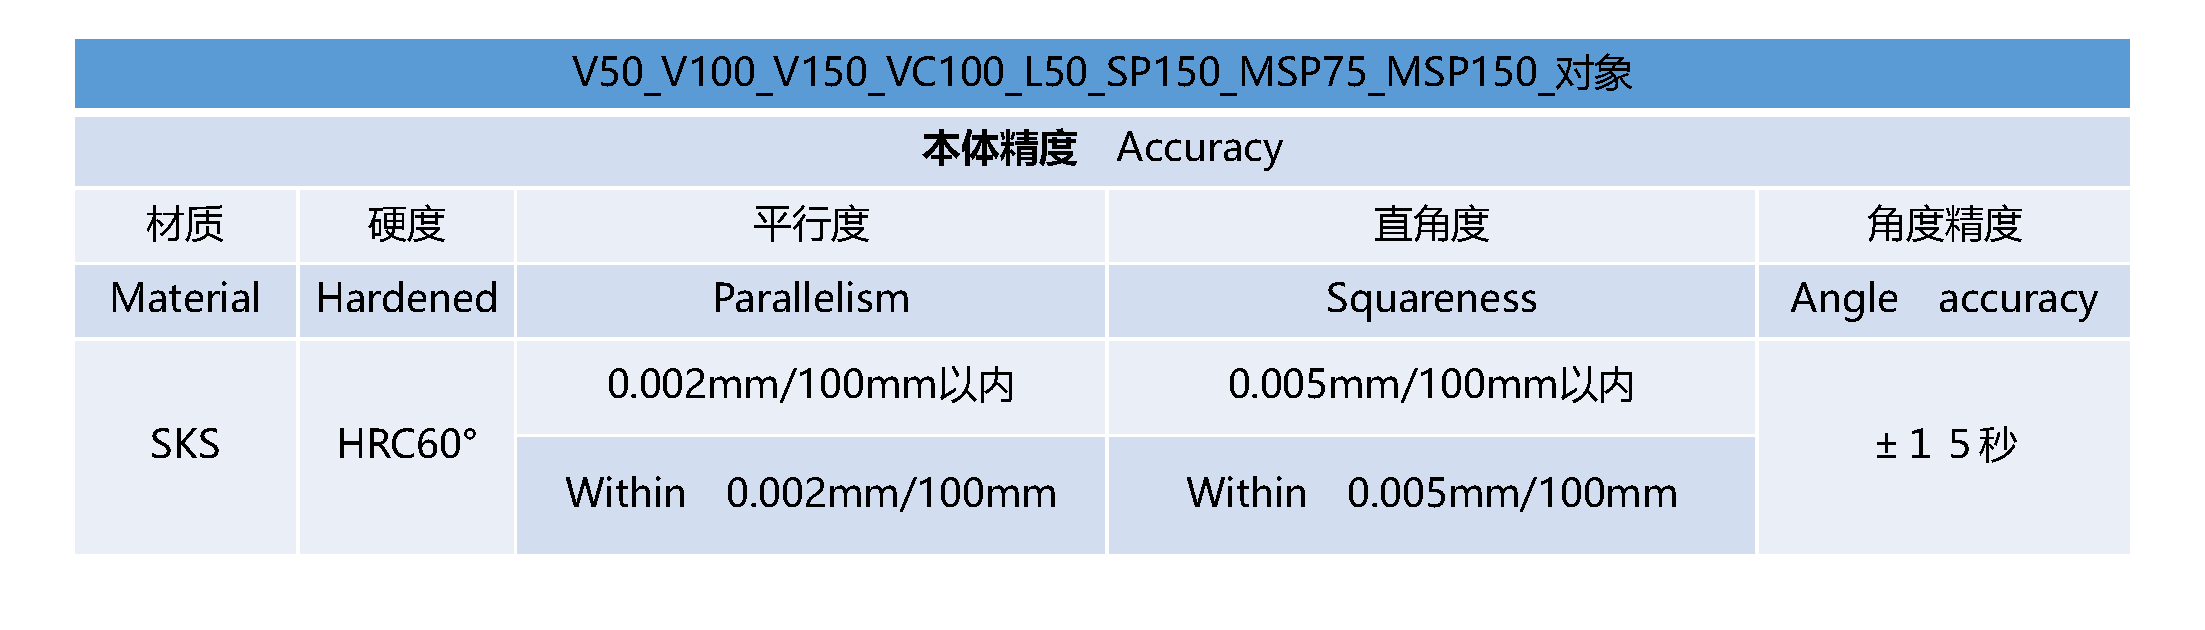 V50_V100_V150_VC100_L50_SP150_MSP150_精度表- 中文.png